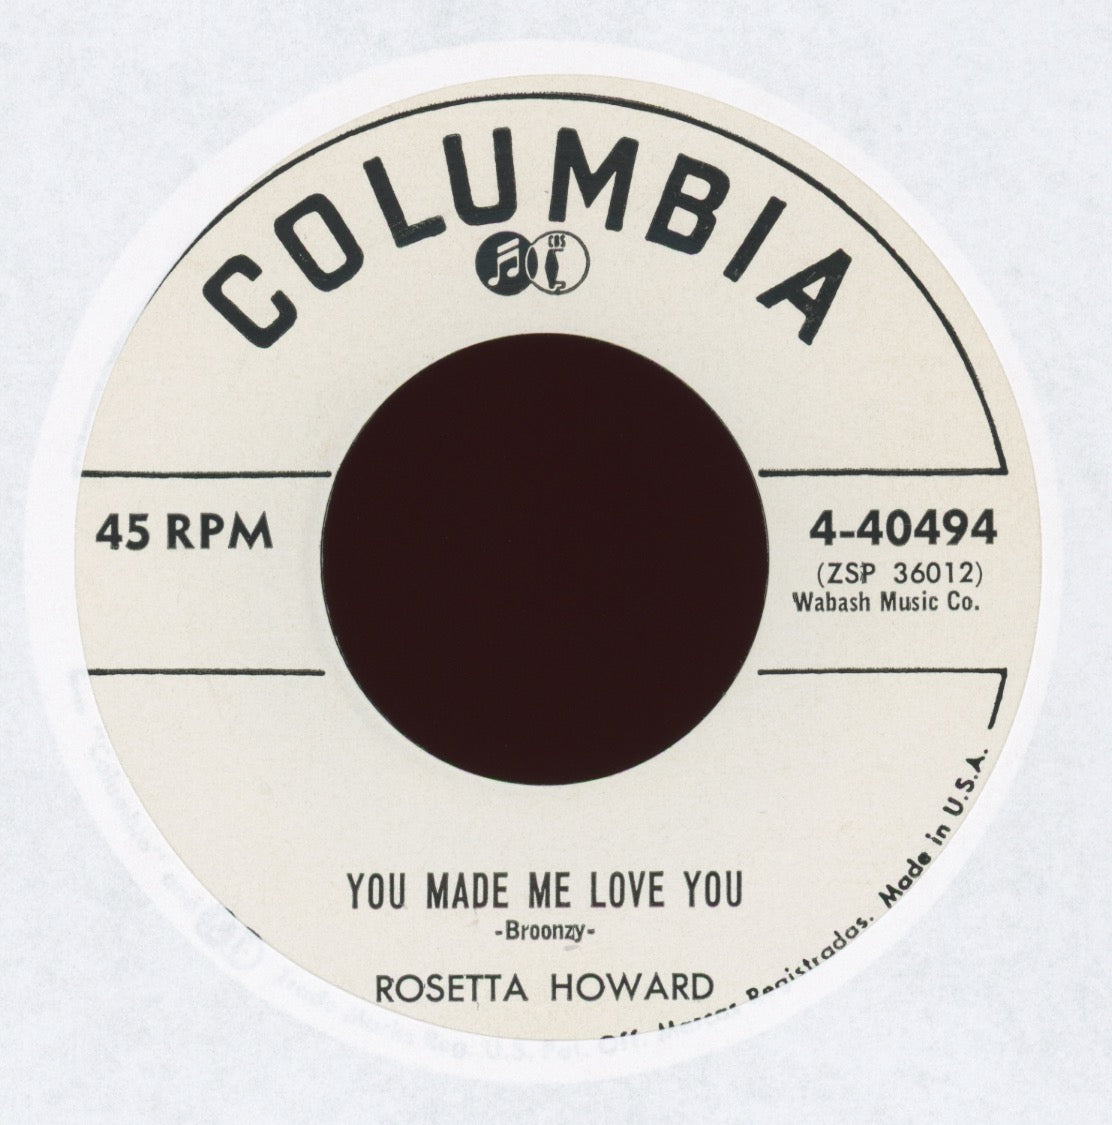 Rosetta Howard - You Made Me Love You on Columbia